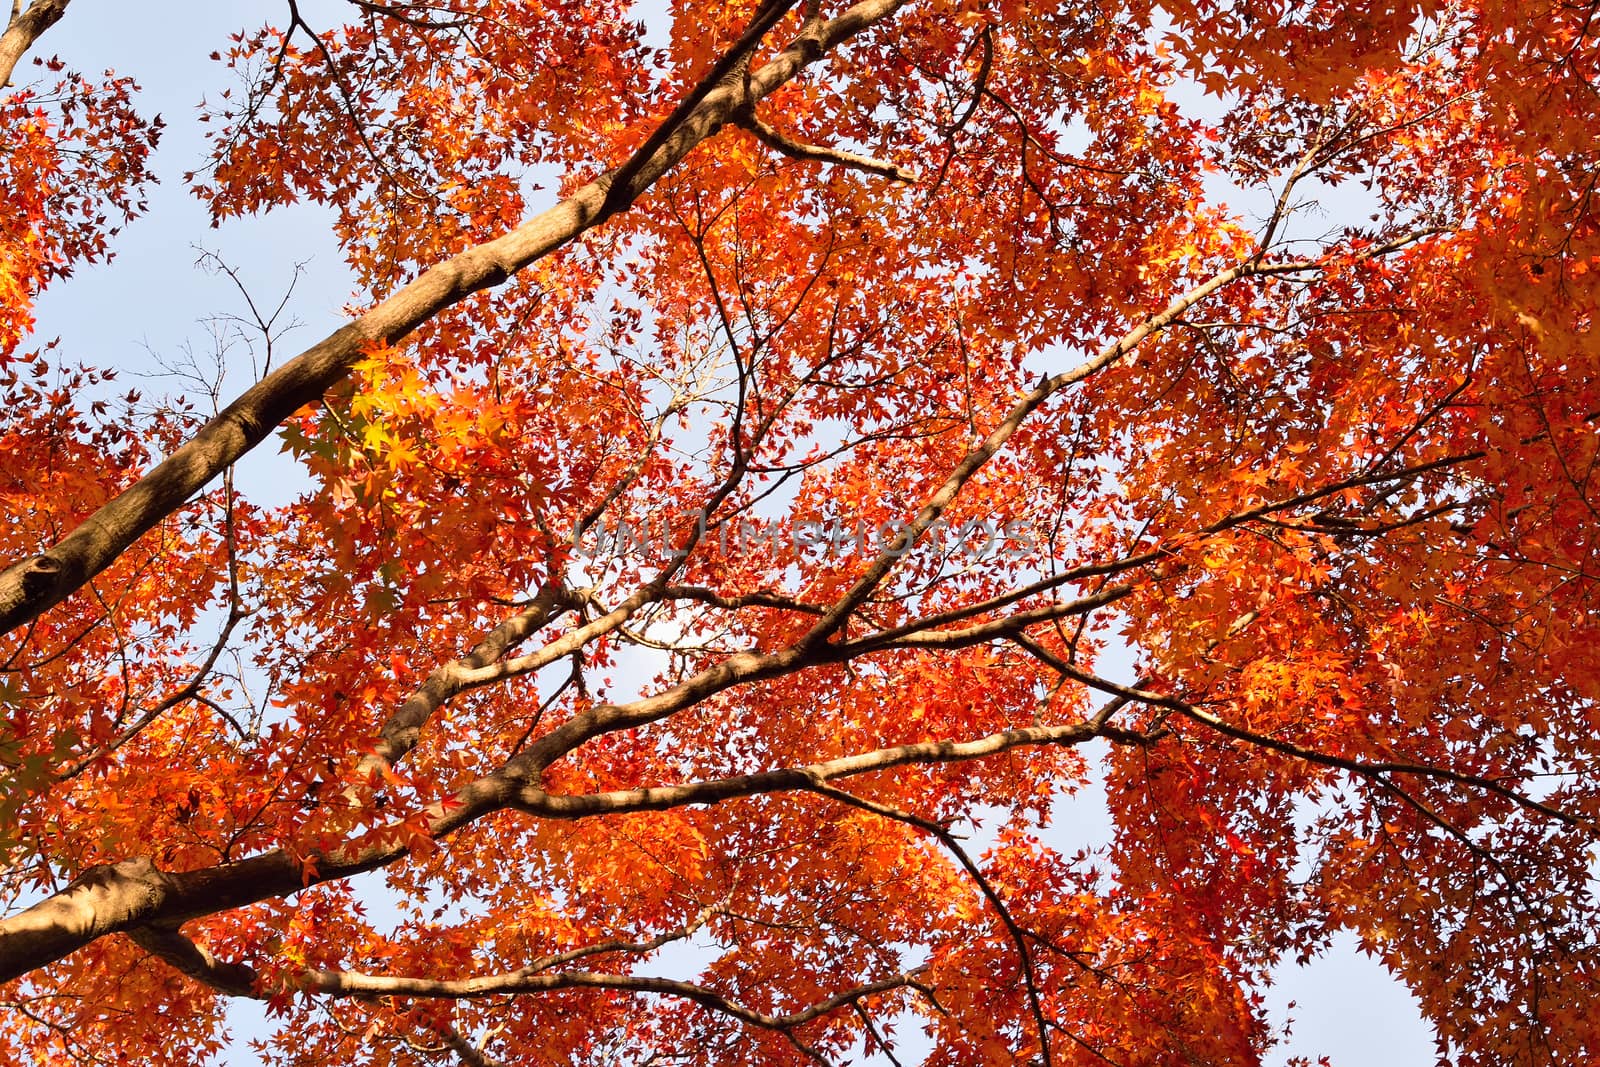 Vibrant Japanese Autumn Maple leaves Landscape with blurred background by shubhashish